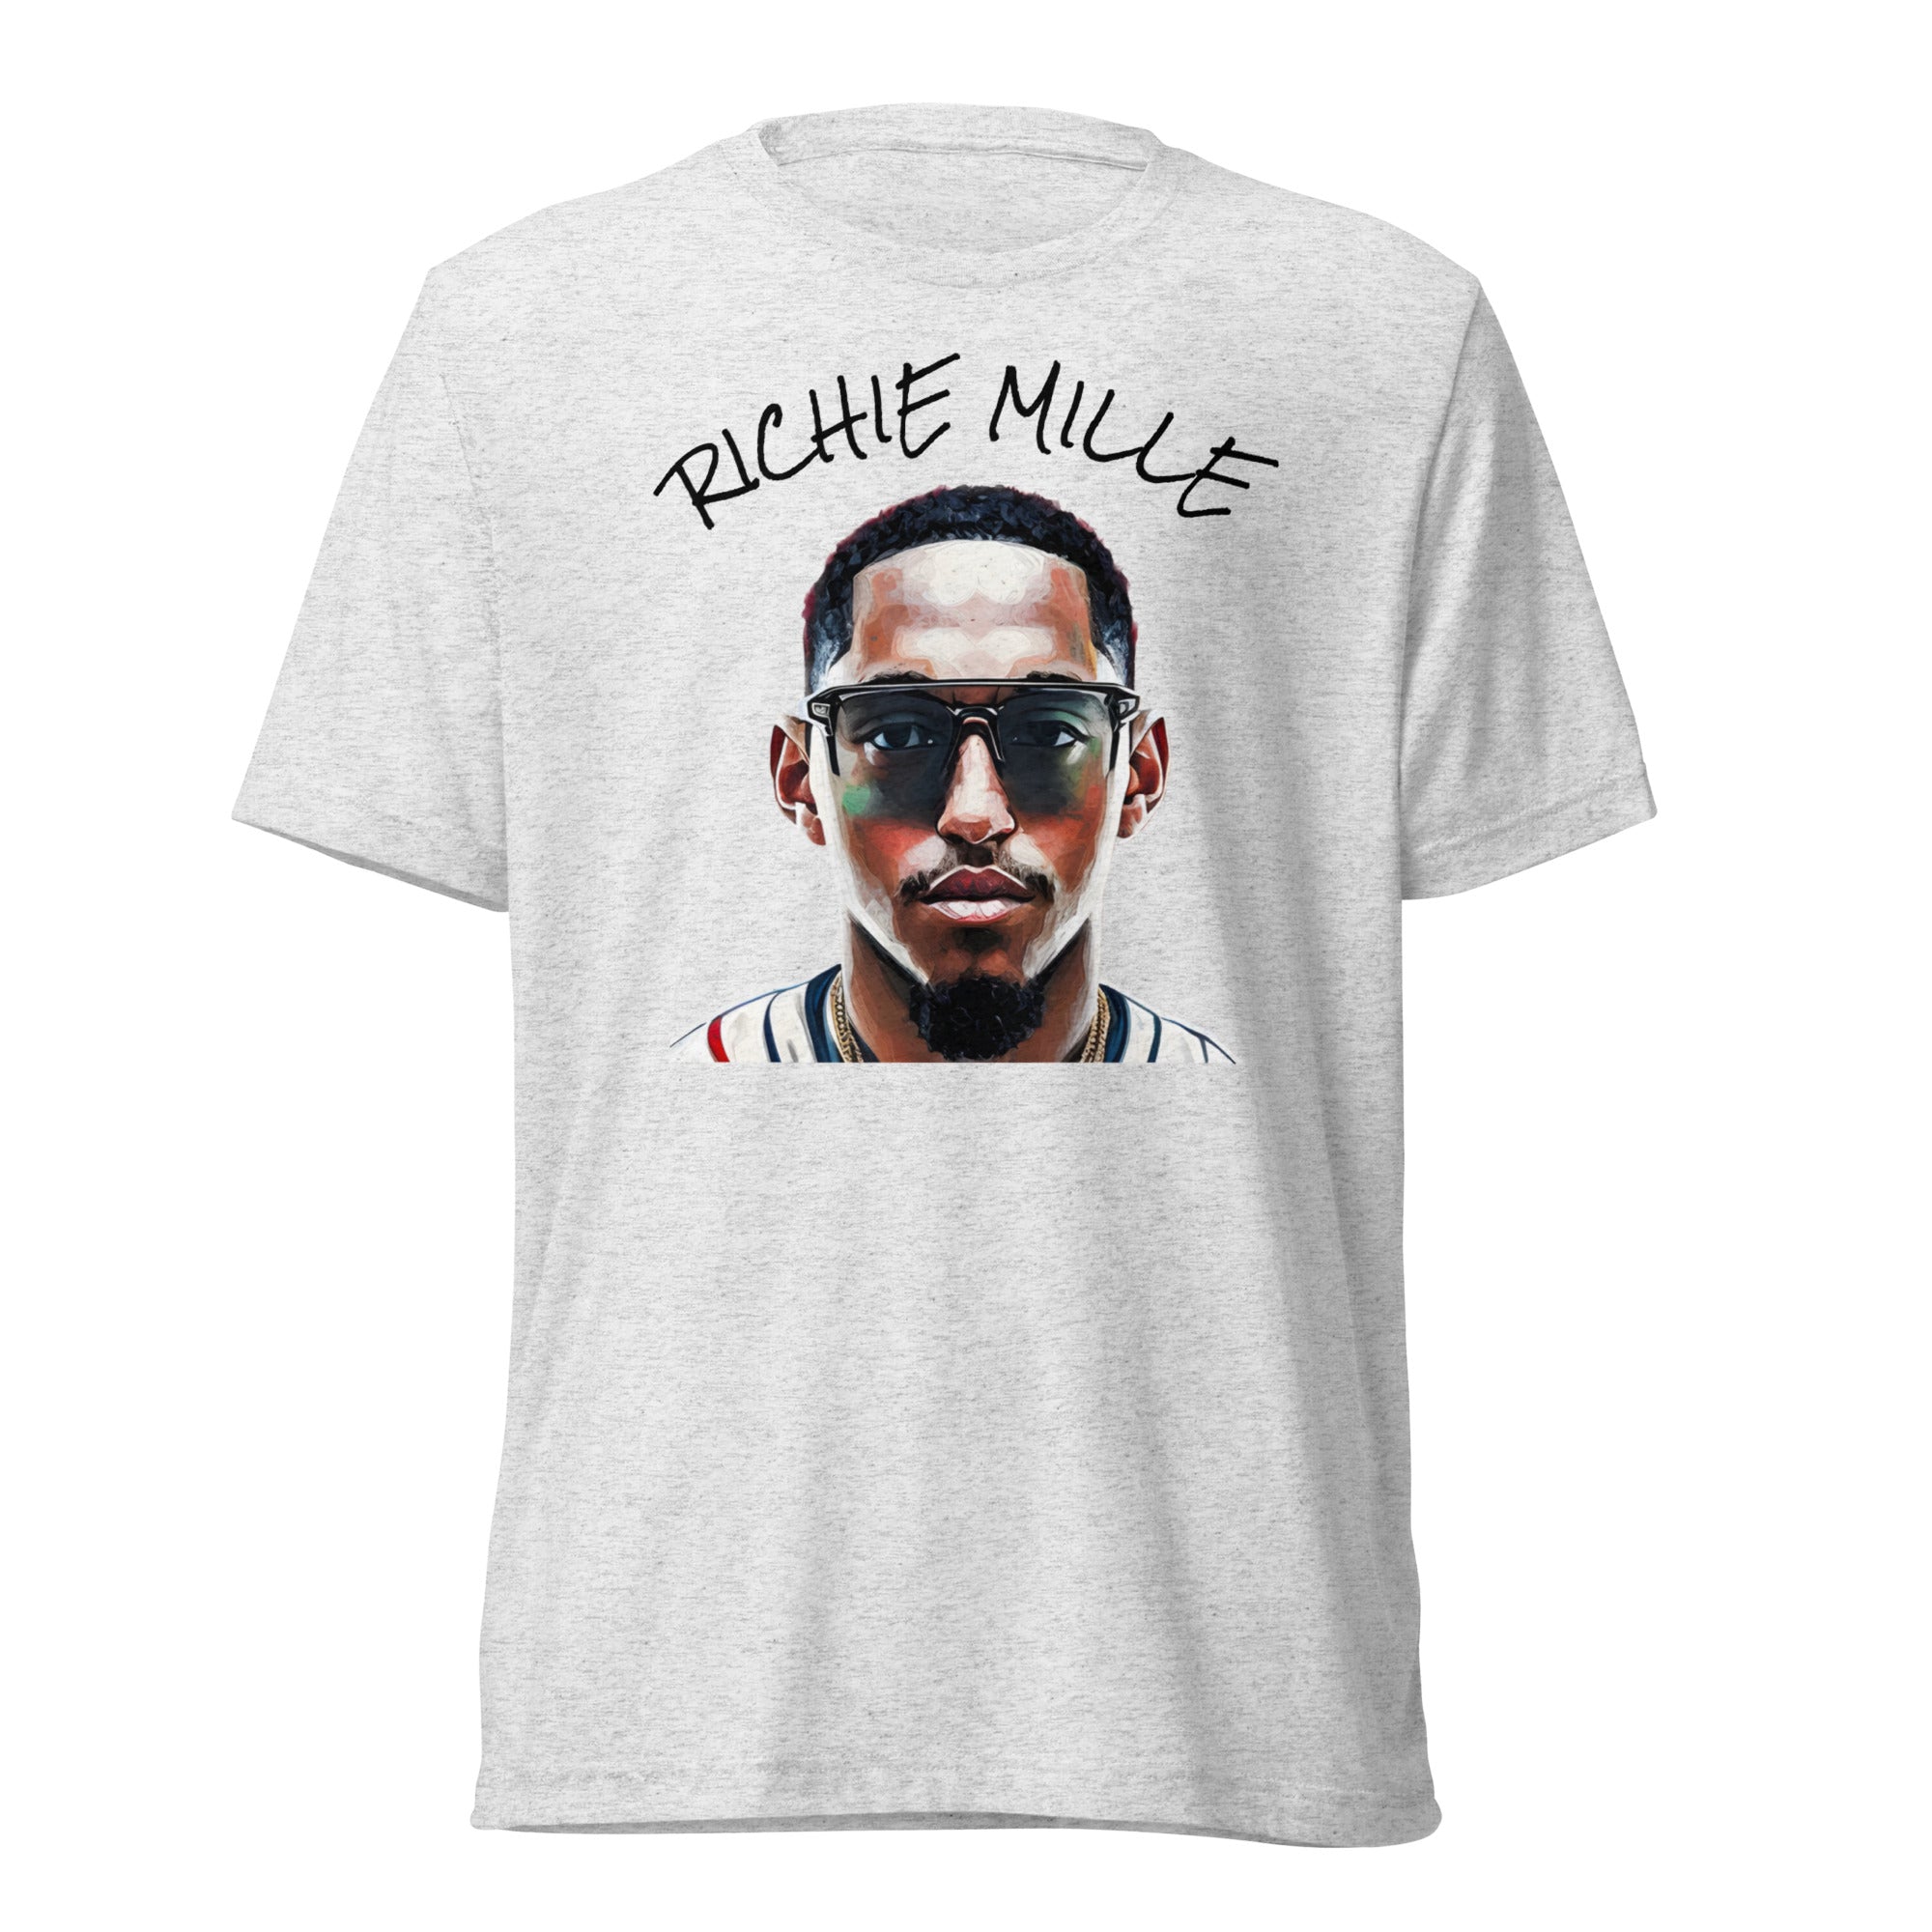 Richie Mille Shirt #2